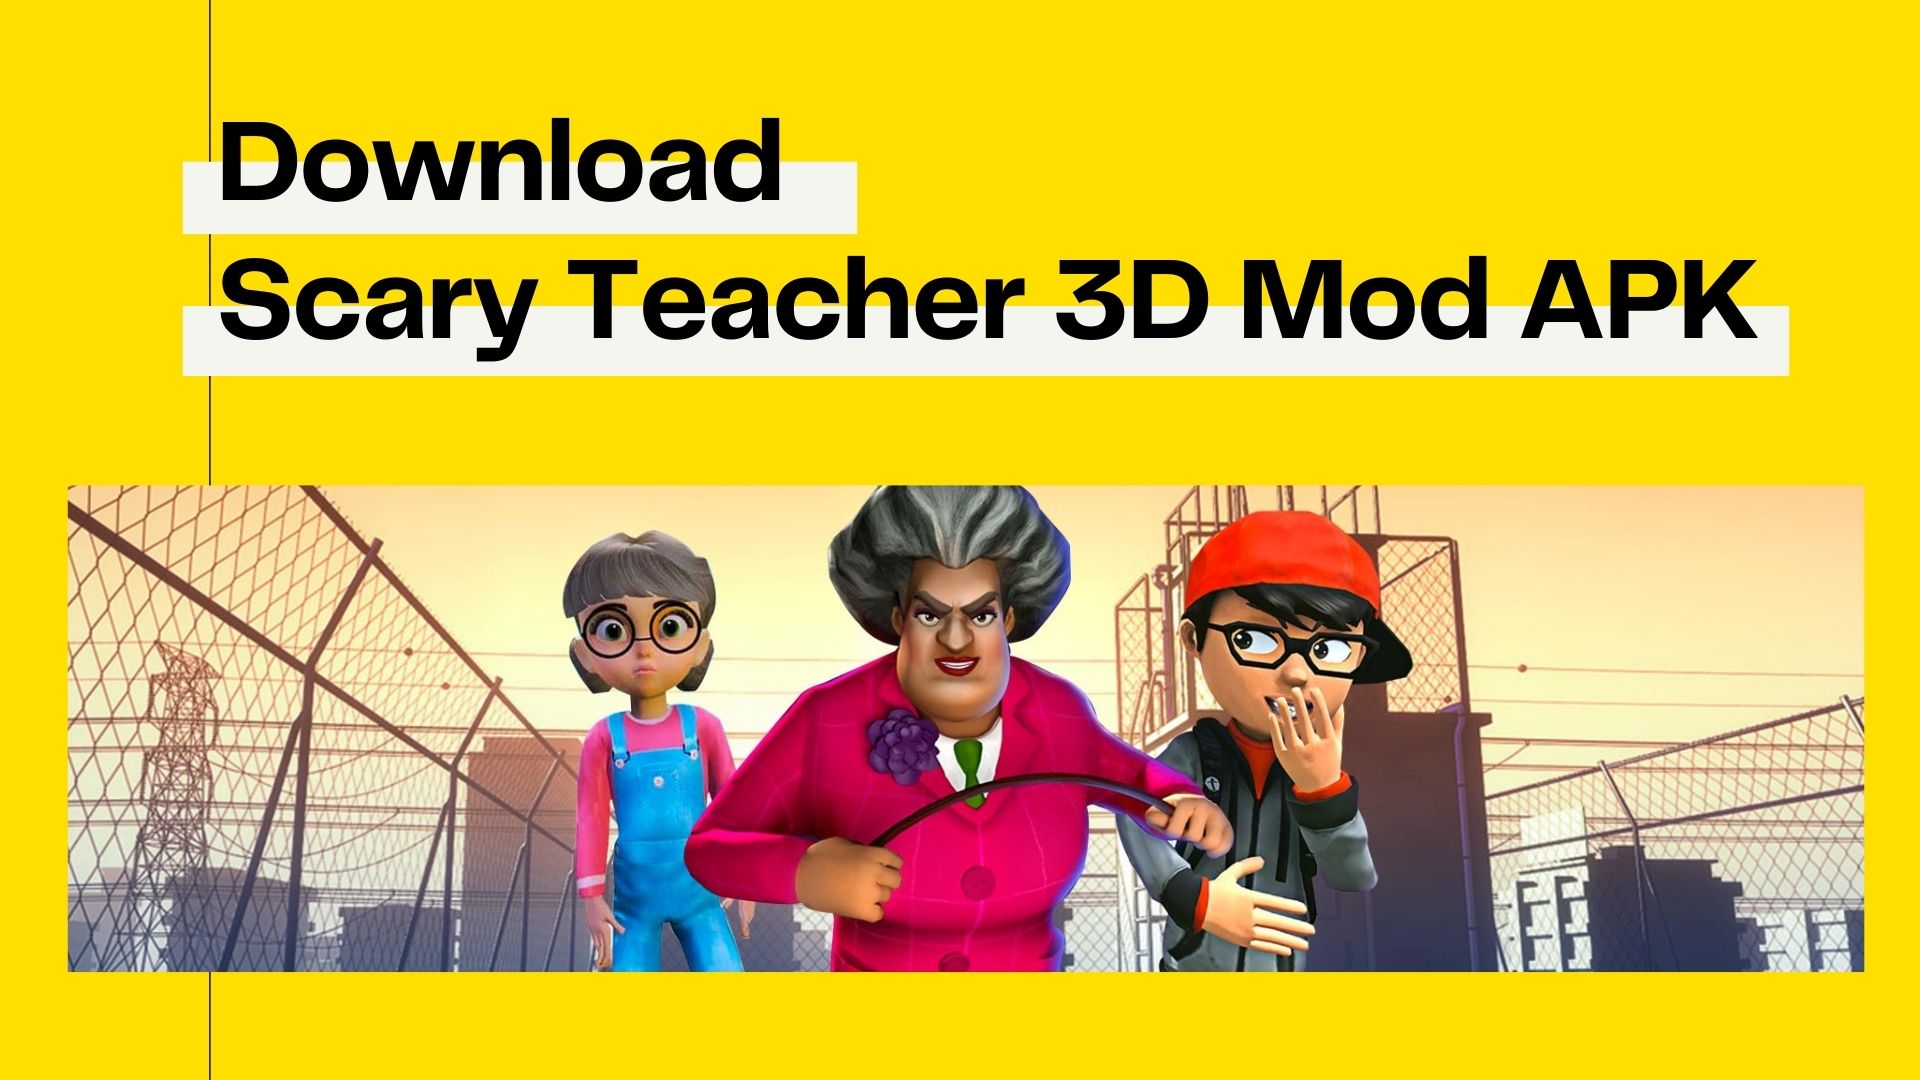 Download Scary Teacher 3D Mod APK